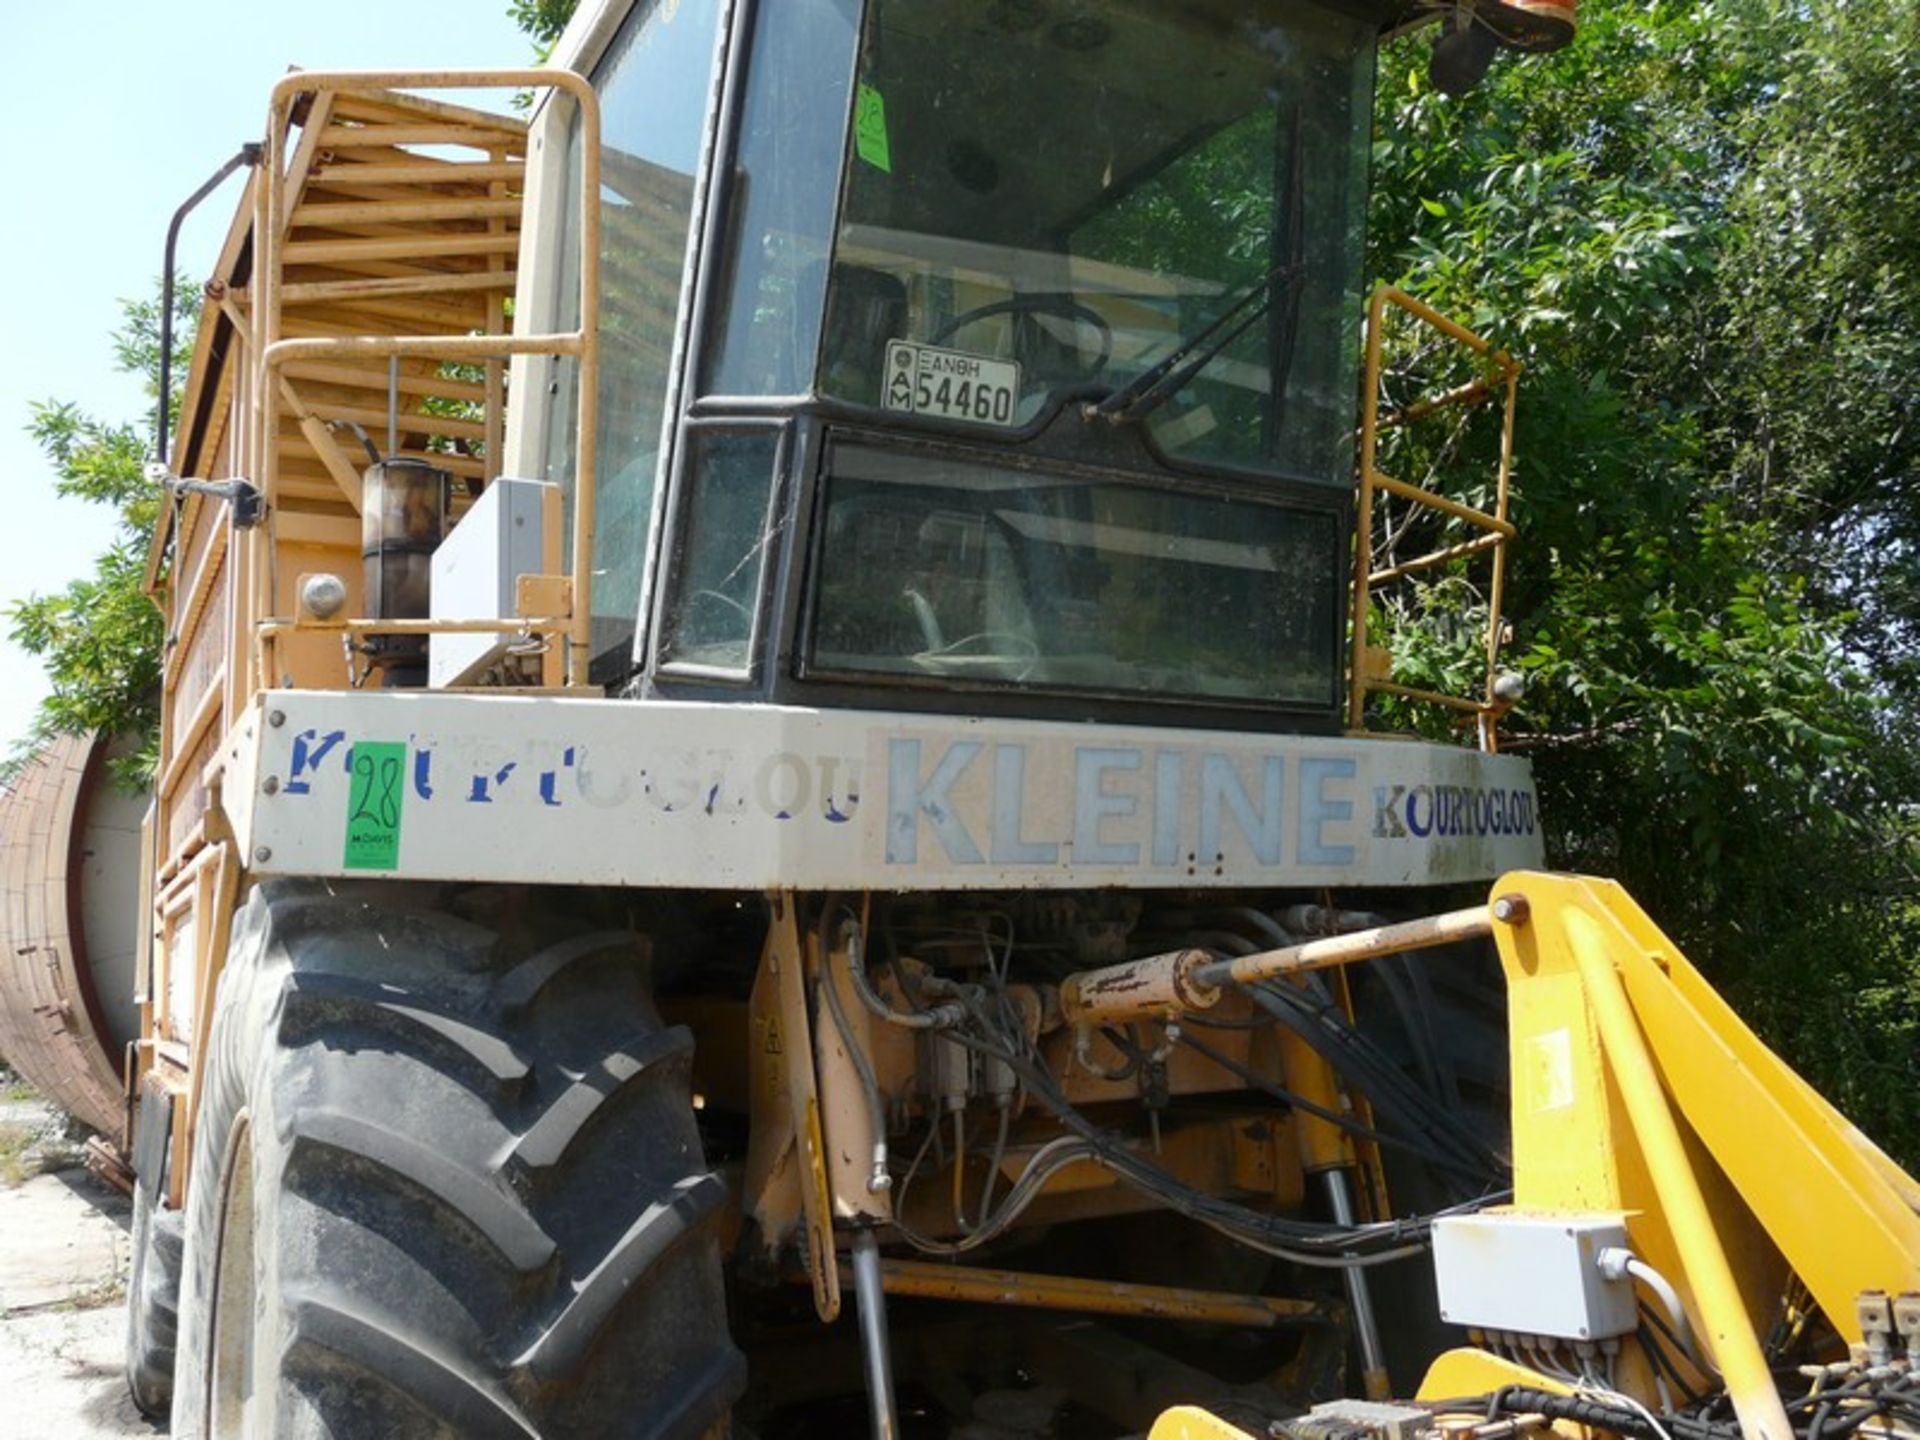 Sugar Beet harvester KLEINE SF-10, 6 ROW, REG XANTHI 54460, 5925Hours (Located in Greece - Plati